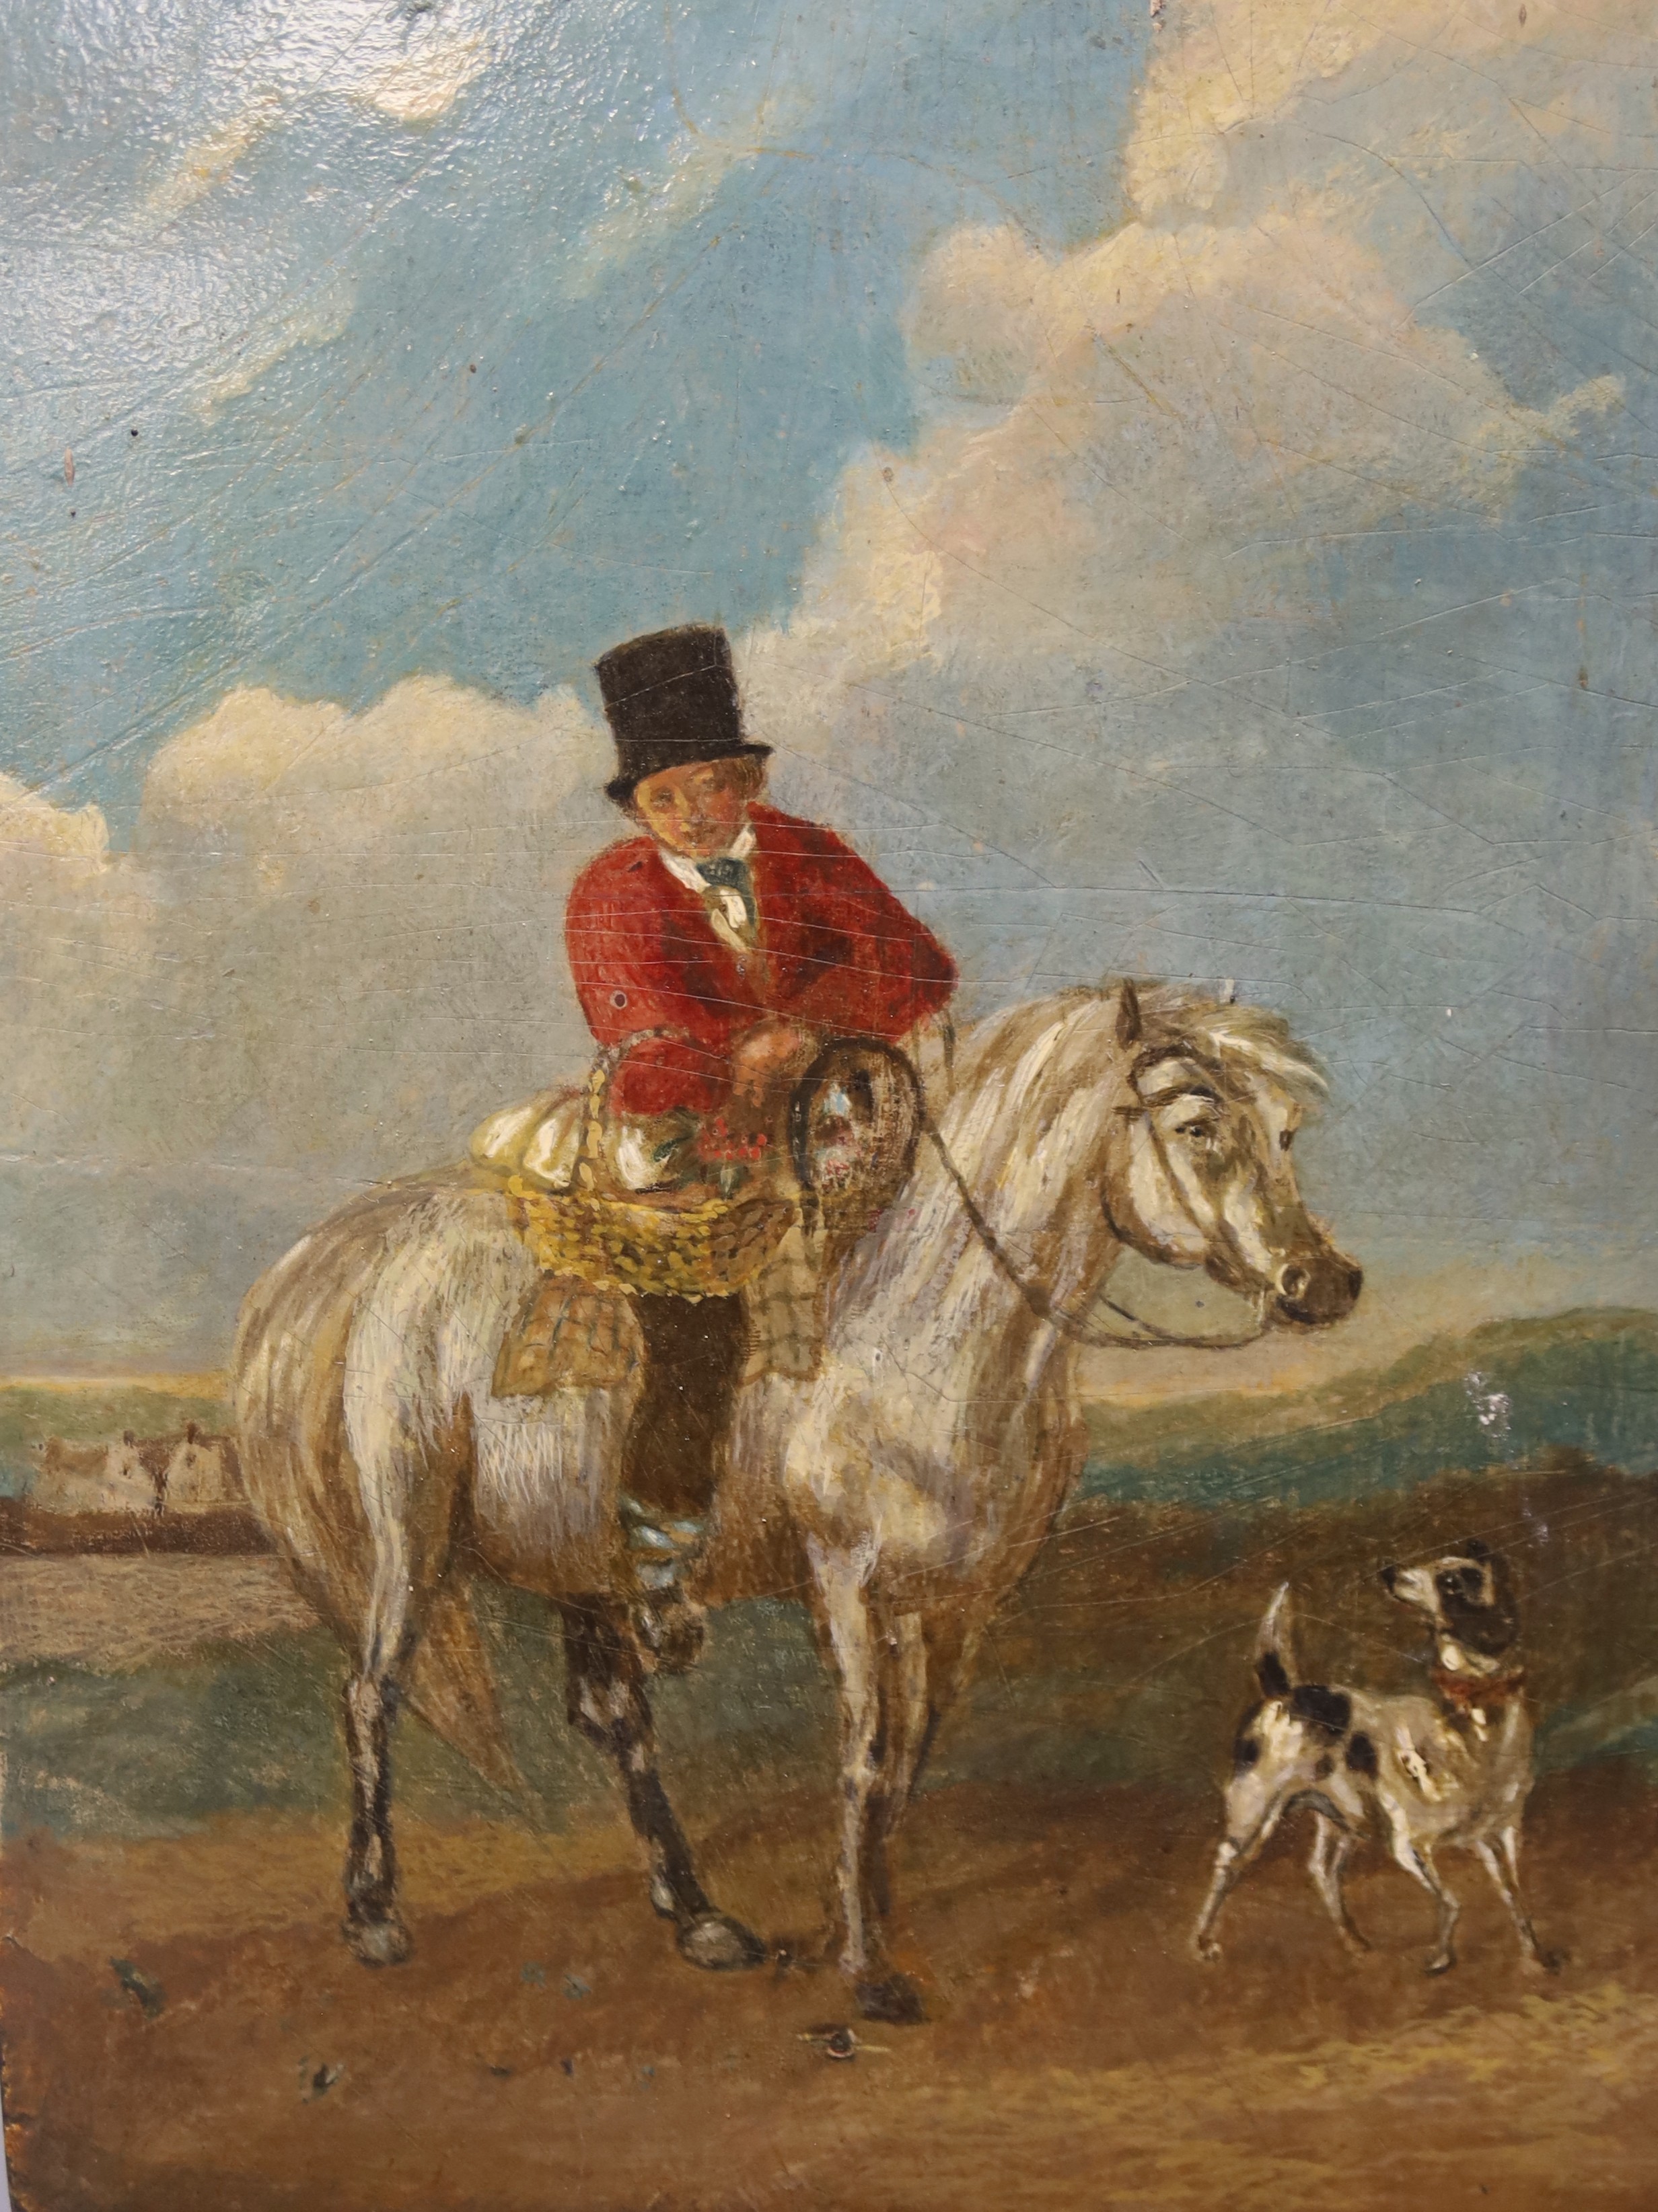 After Edmund Bristow, c.1830, oil on wooden panel, Gentleman on horseback on route to market, 23 x 18cm, unframed